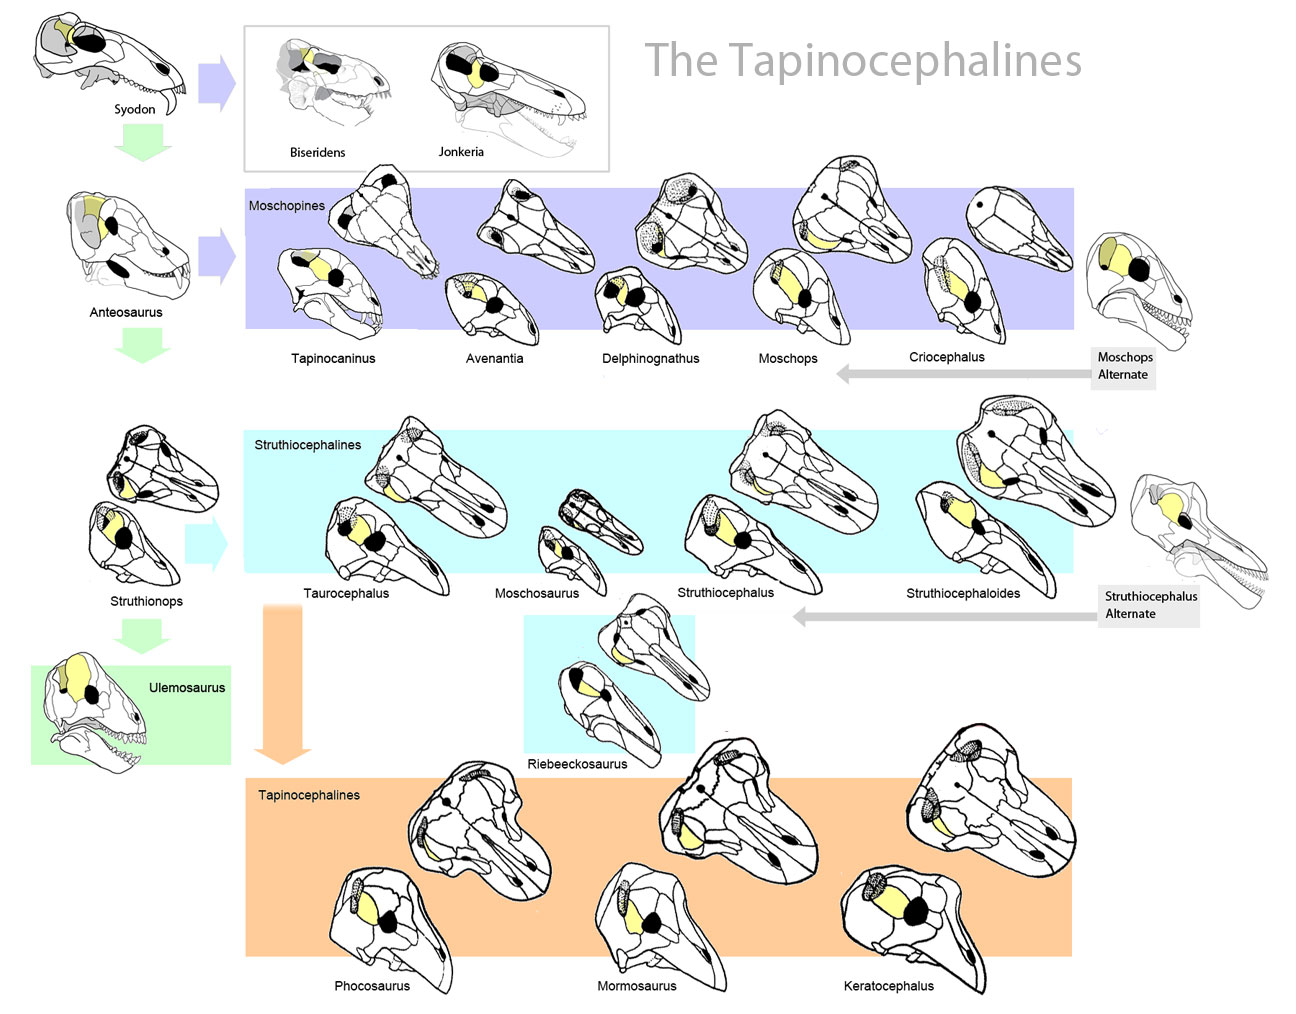 Tapinocephalids